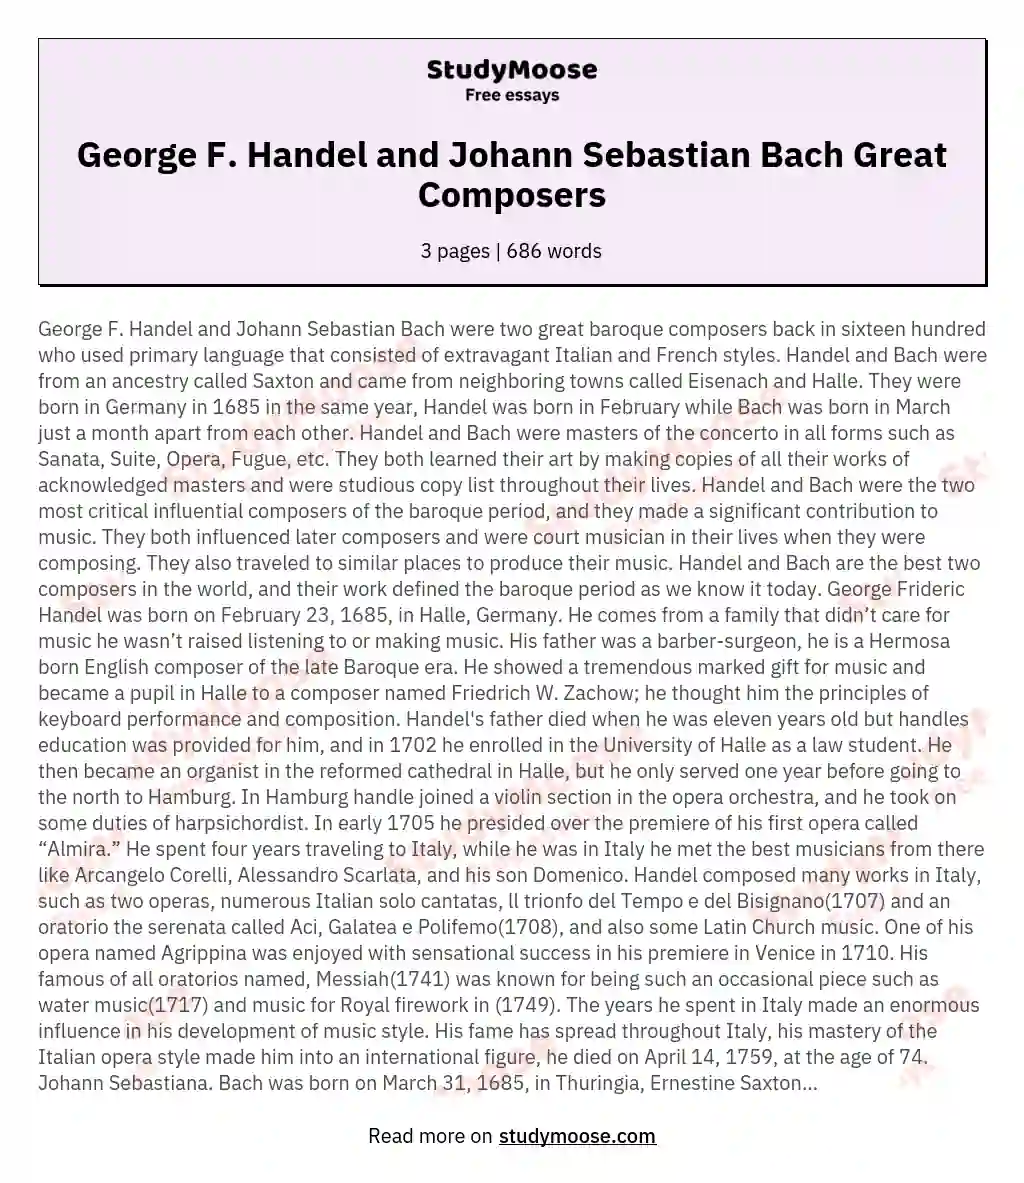 George F. Handel and Johann Sebastian Bach Great Composers